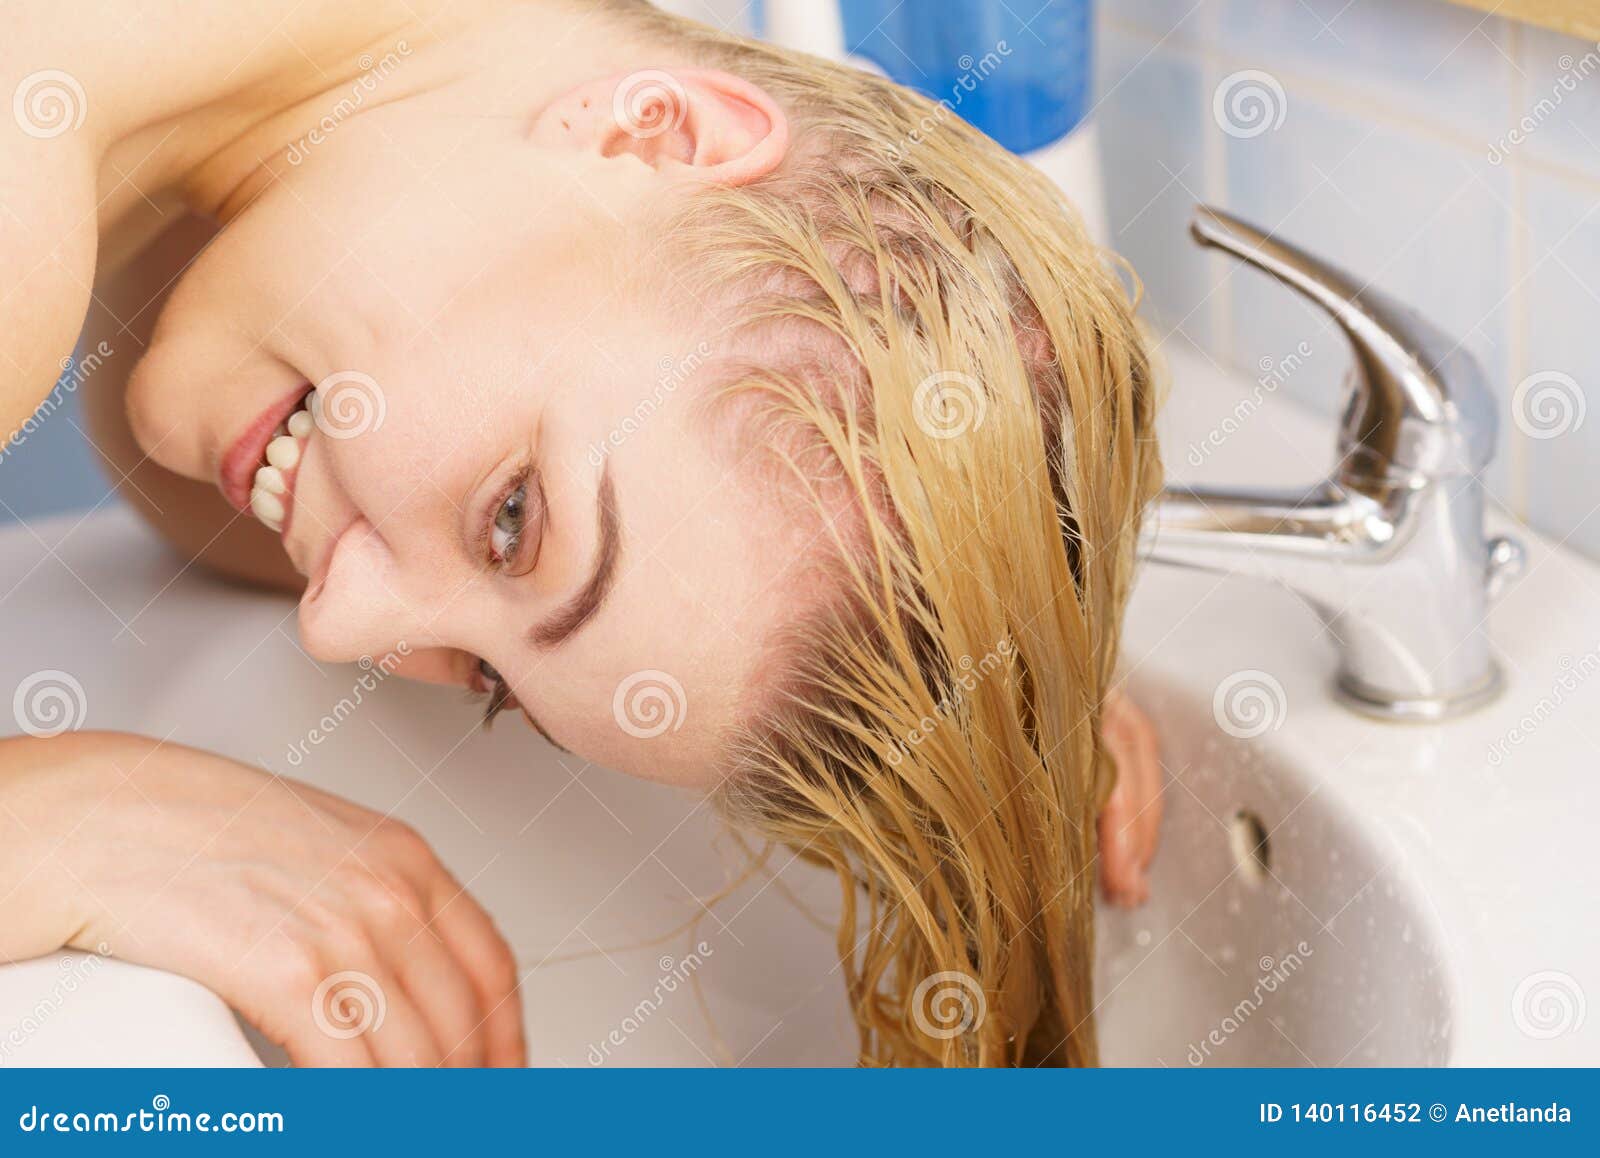 washing hair in bathroom sink